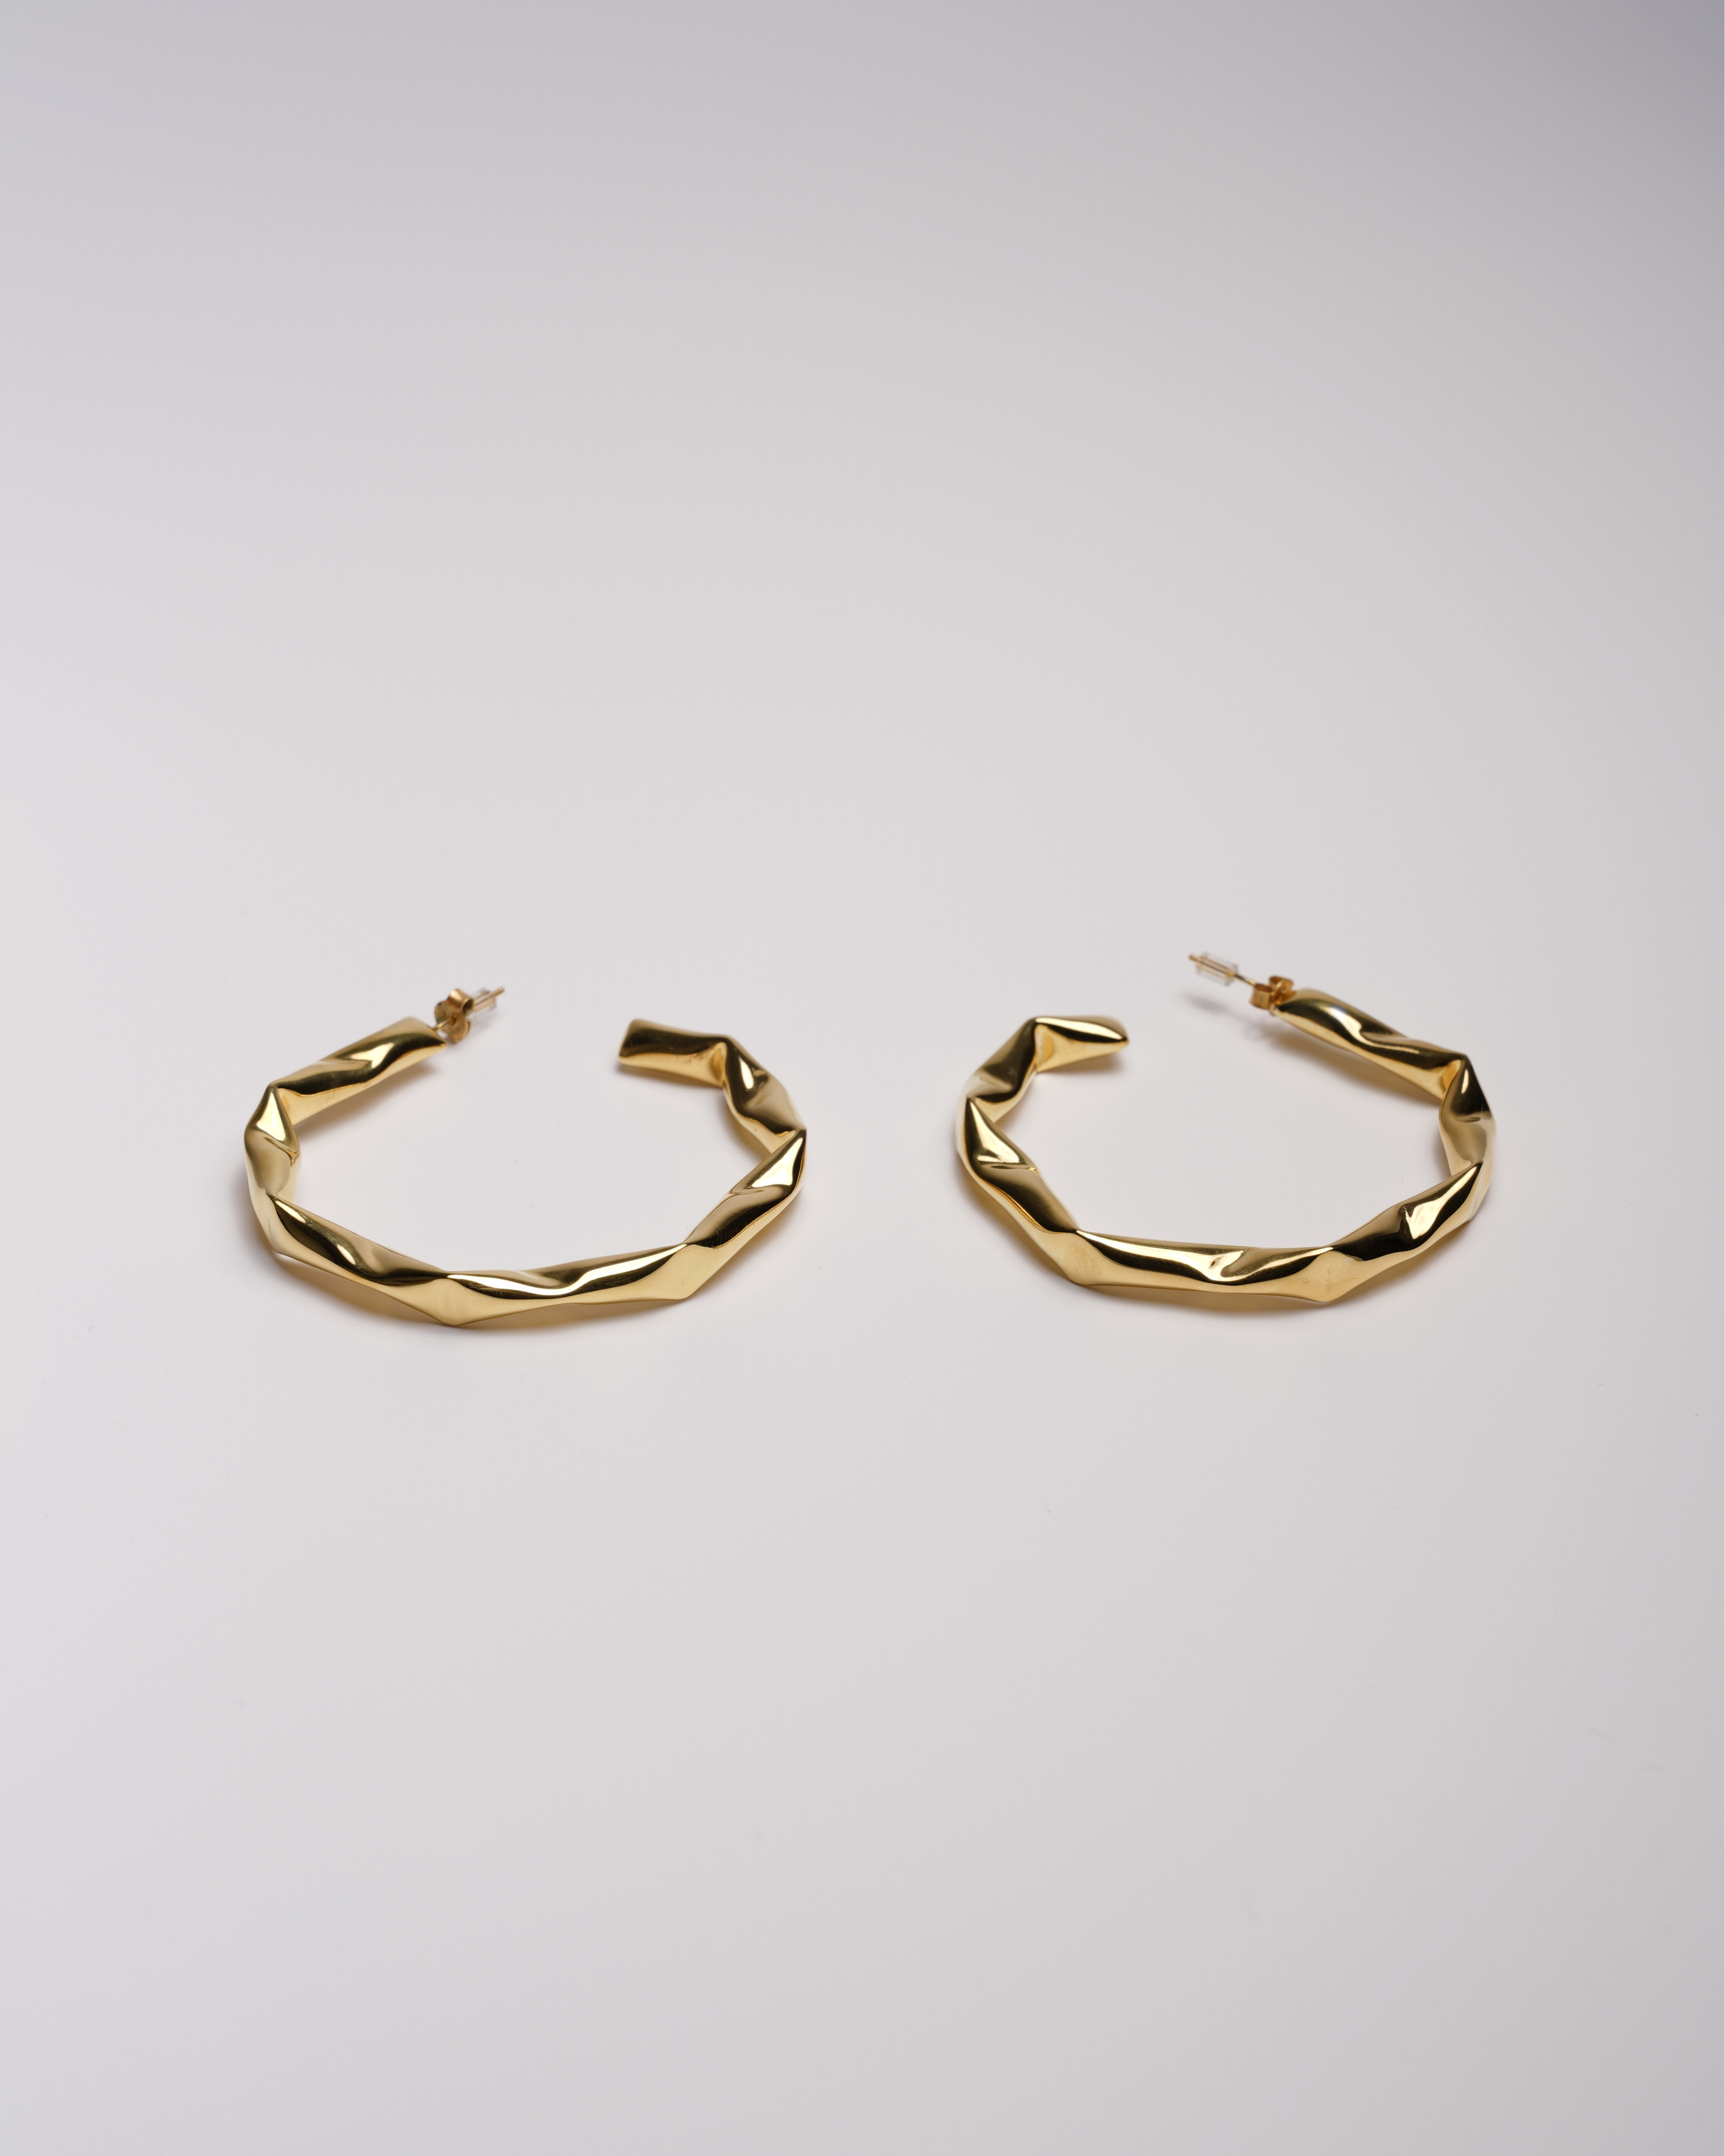 24K yellow gold vermeil large earring hoops in 925 silver